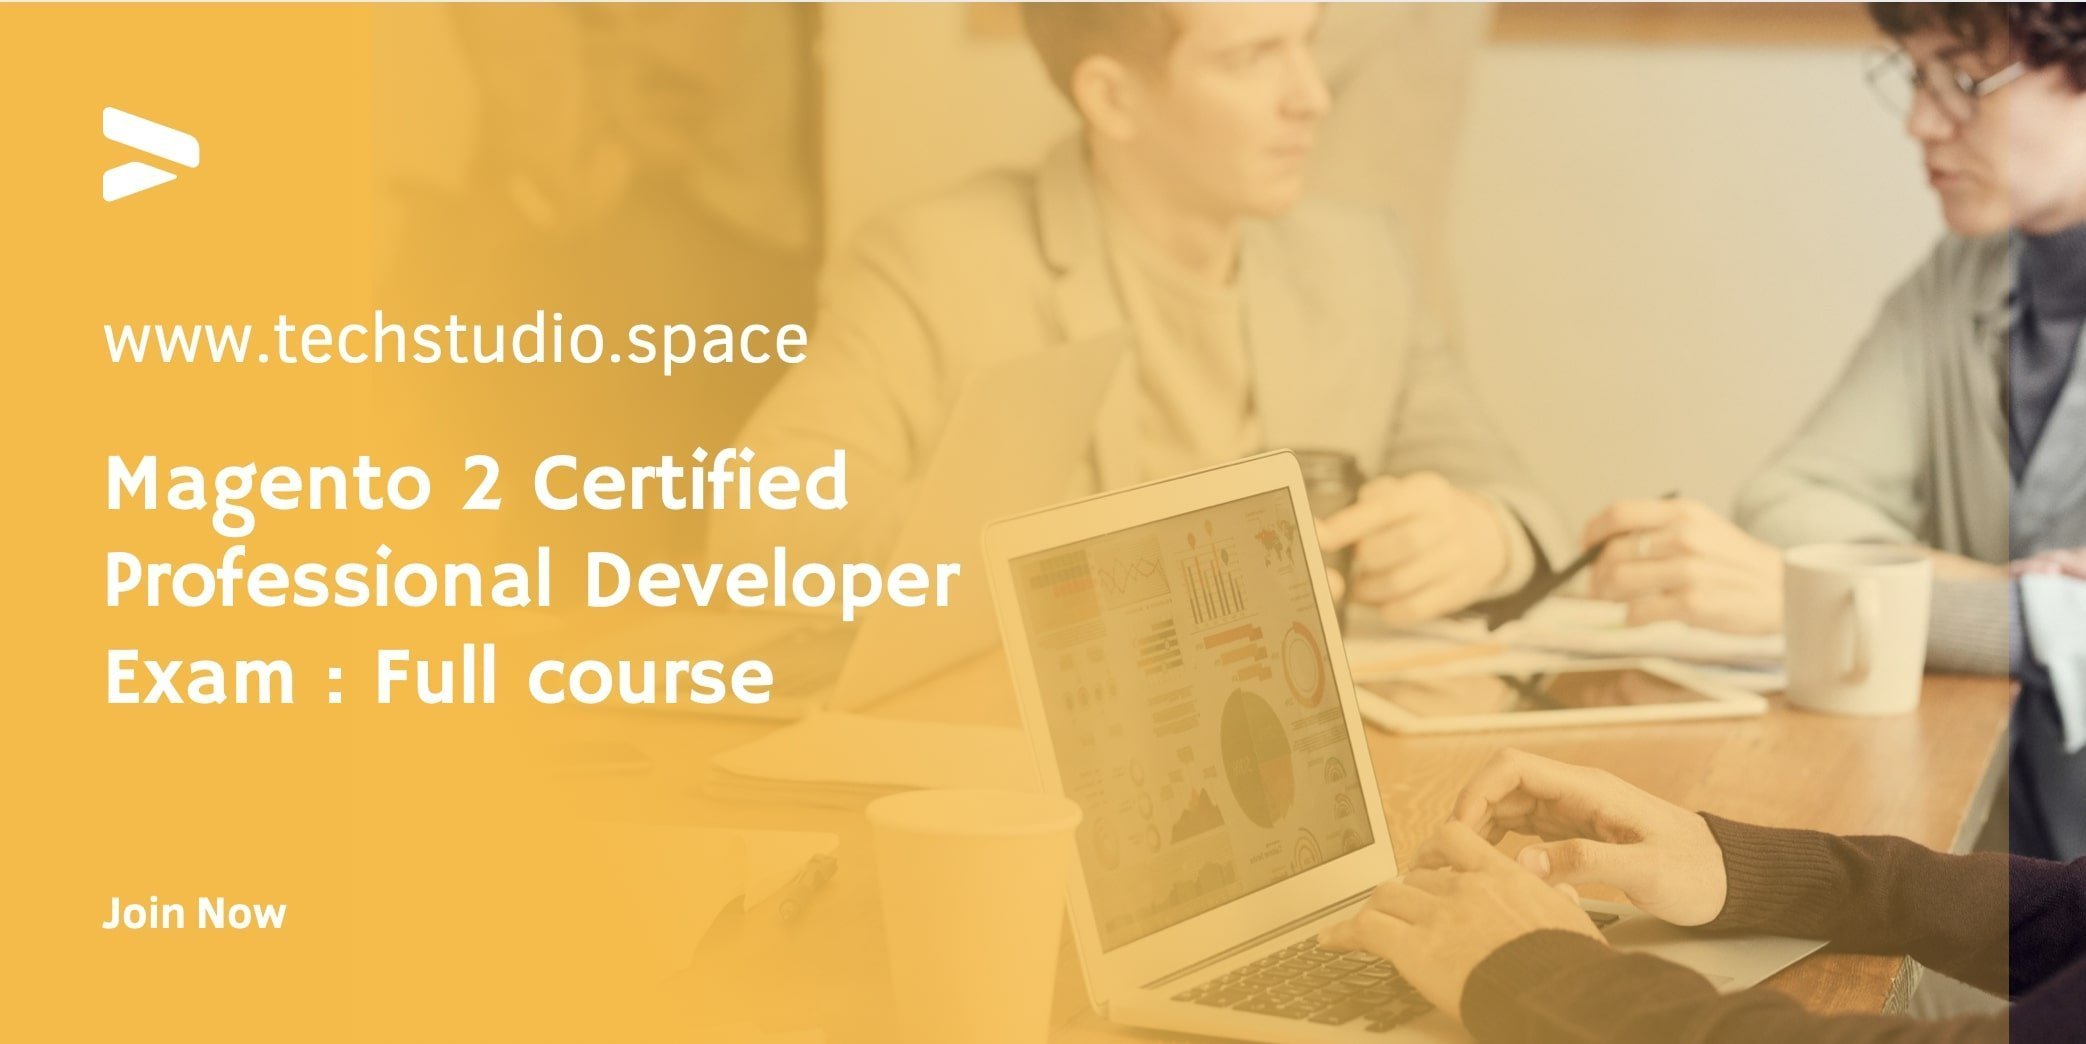 Magento 2 Certified Professional Developer Exam